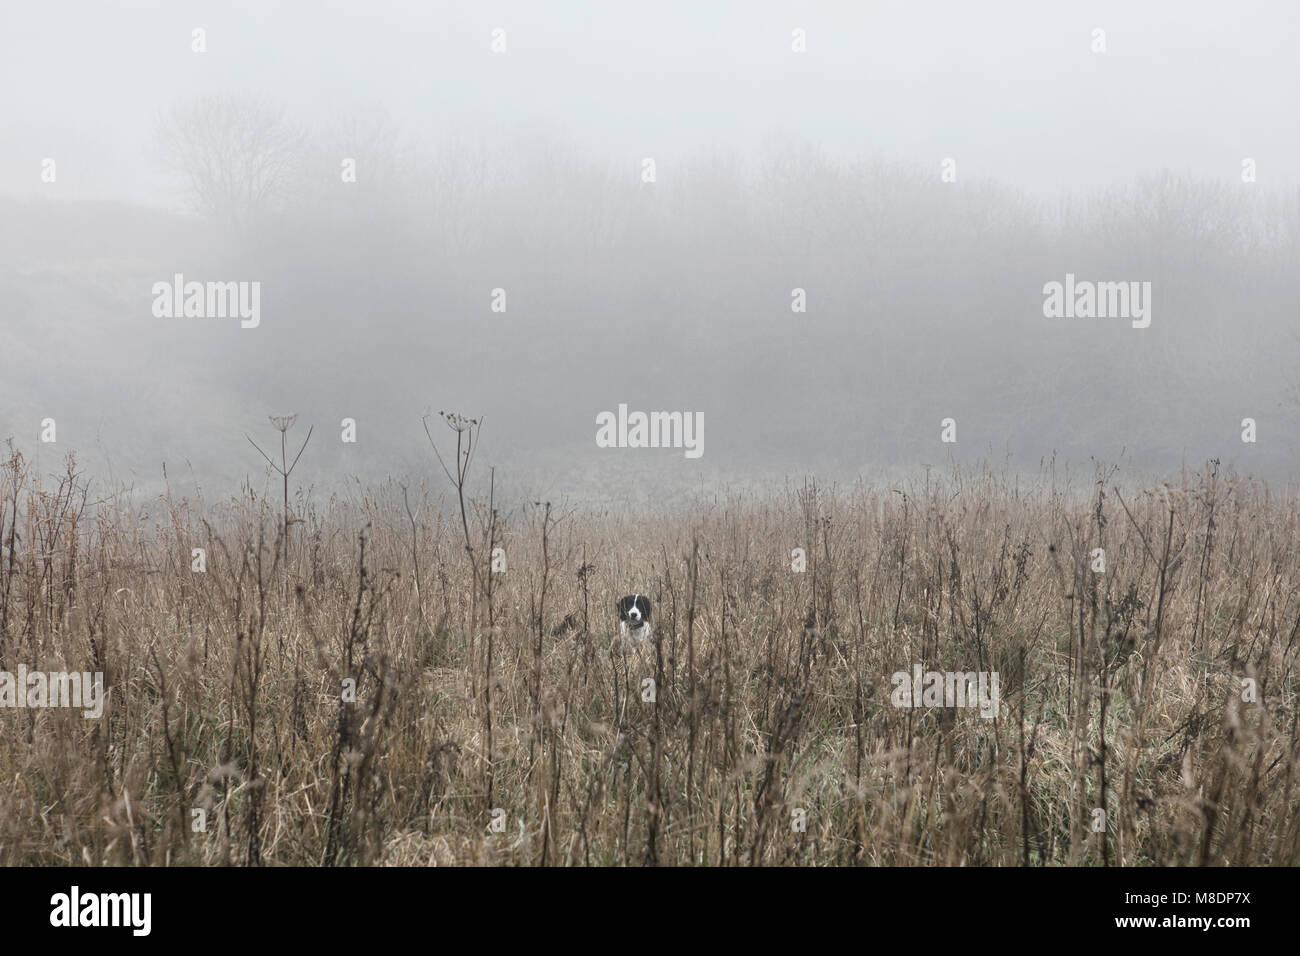 Portrait of dog in misty field, Houghton-le-Spring, Sunderland, UK Stock Photo